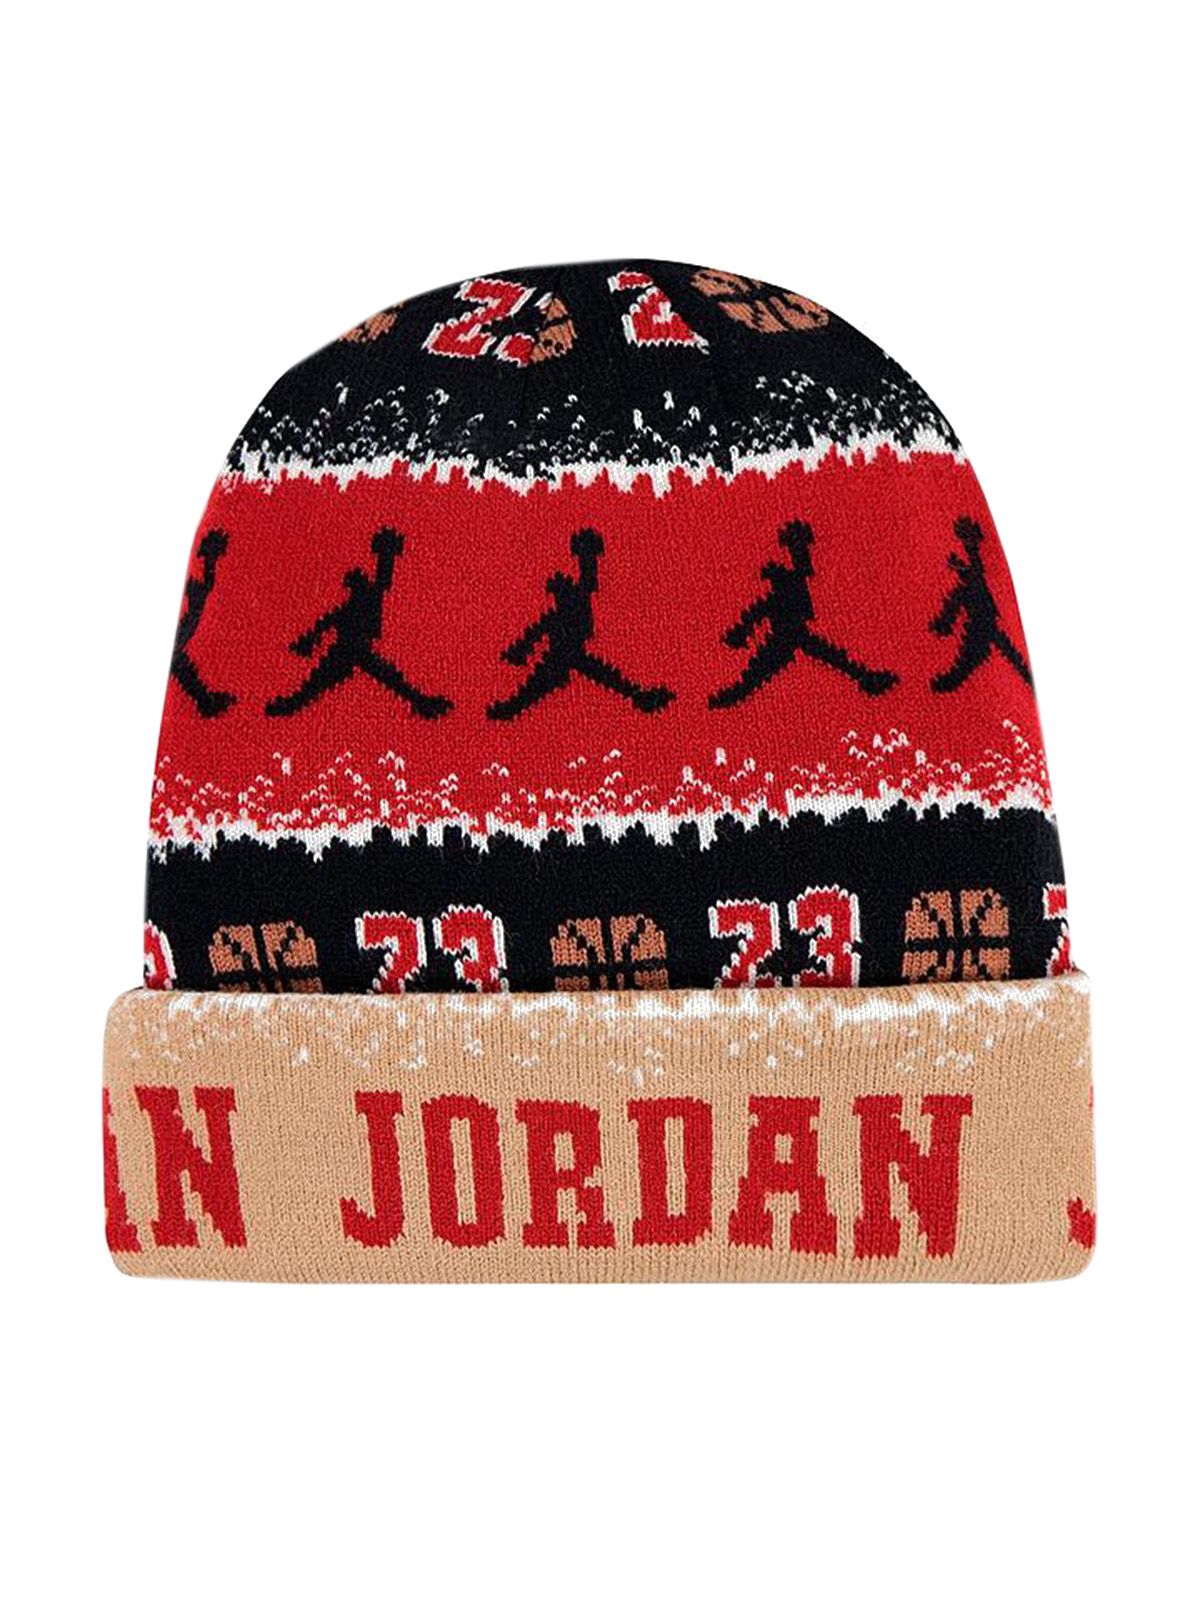 Cappelli e cappellini Ragazzi Unisex Jordan - Mj Holiday Beanie - Nero